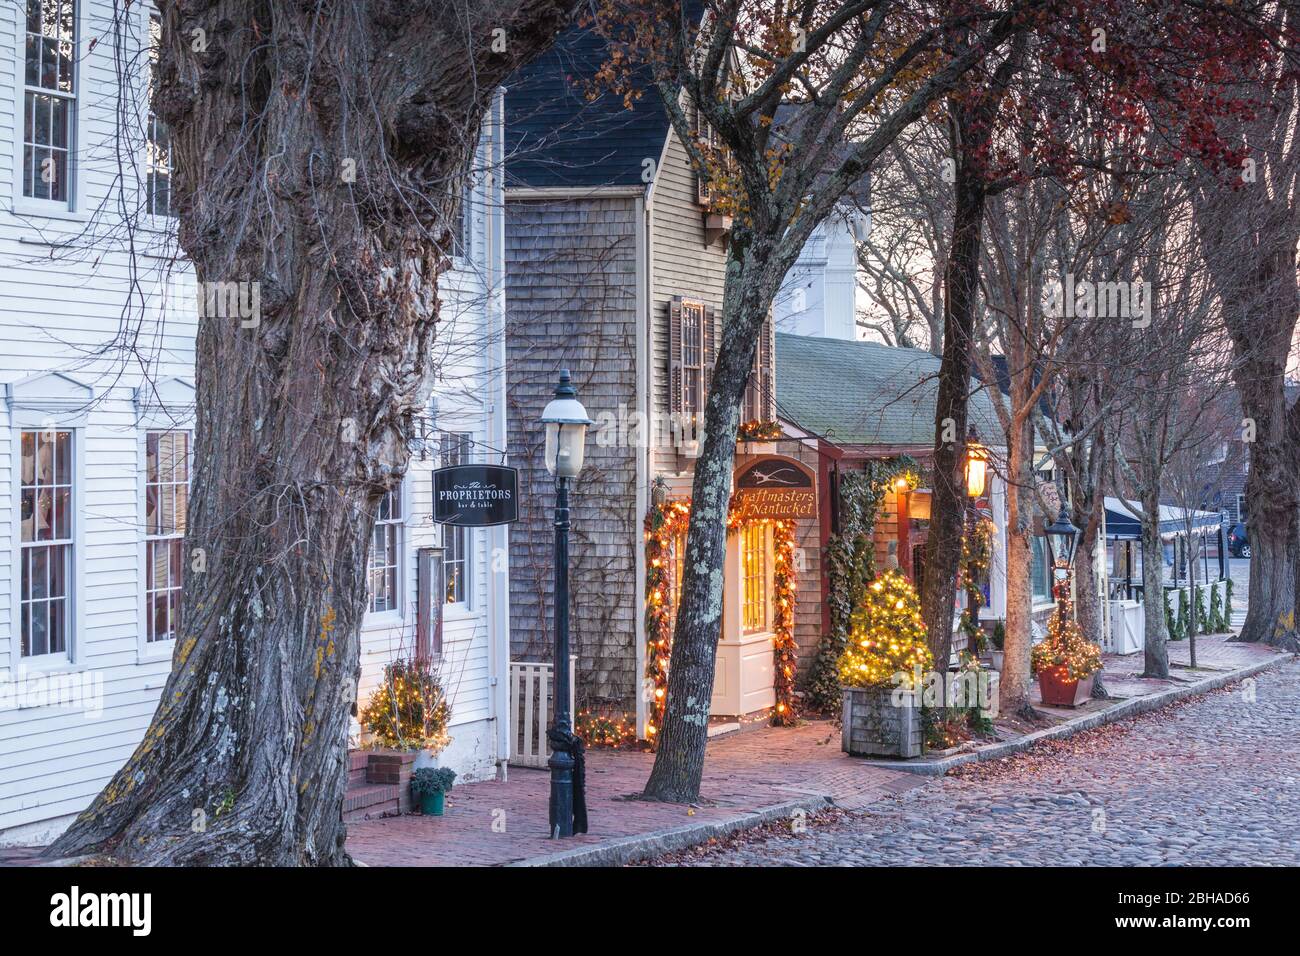 USA, New England, New Jersey, l'île de Nantucket Nantucket, ville, vitrine, Noël Banque D'Images